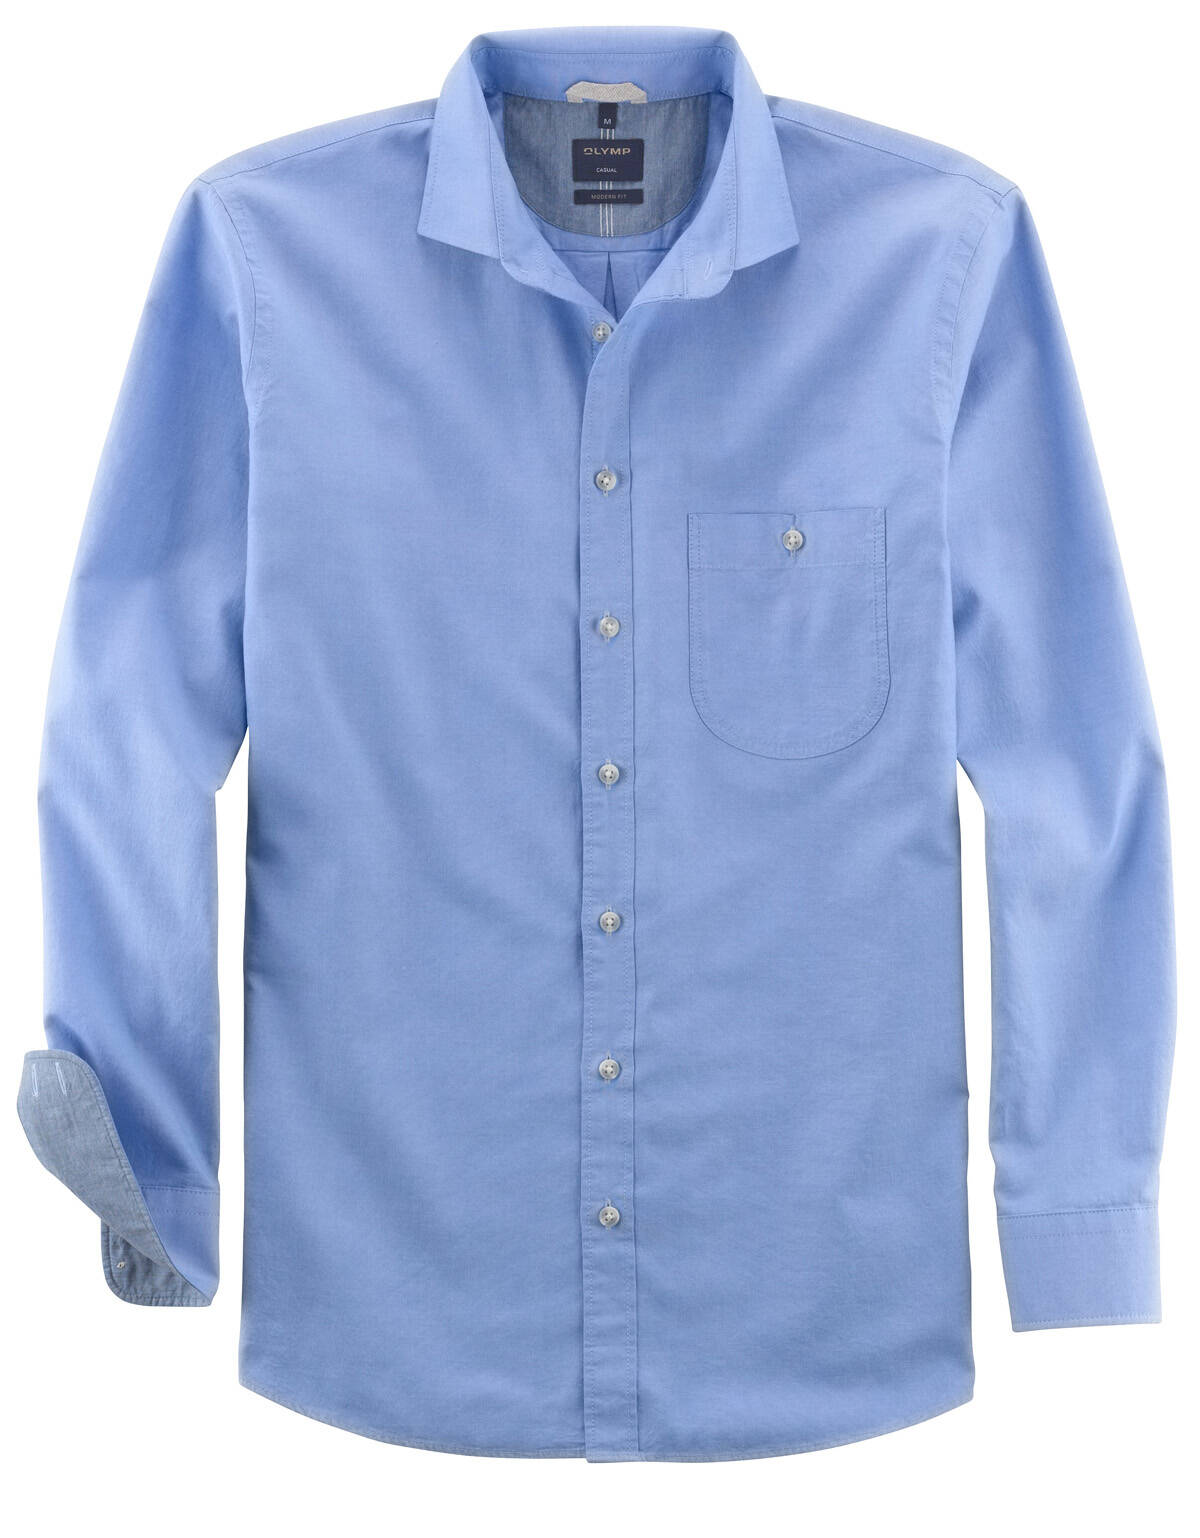 Рубашка голубая мужская OLYMP Casual, modern fit[ГОЛУБОЙ]